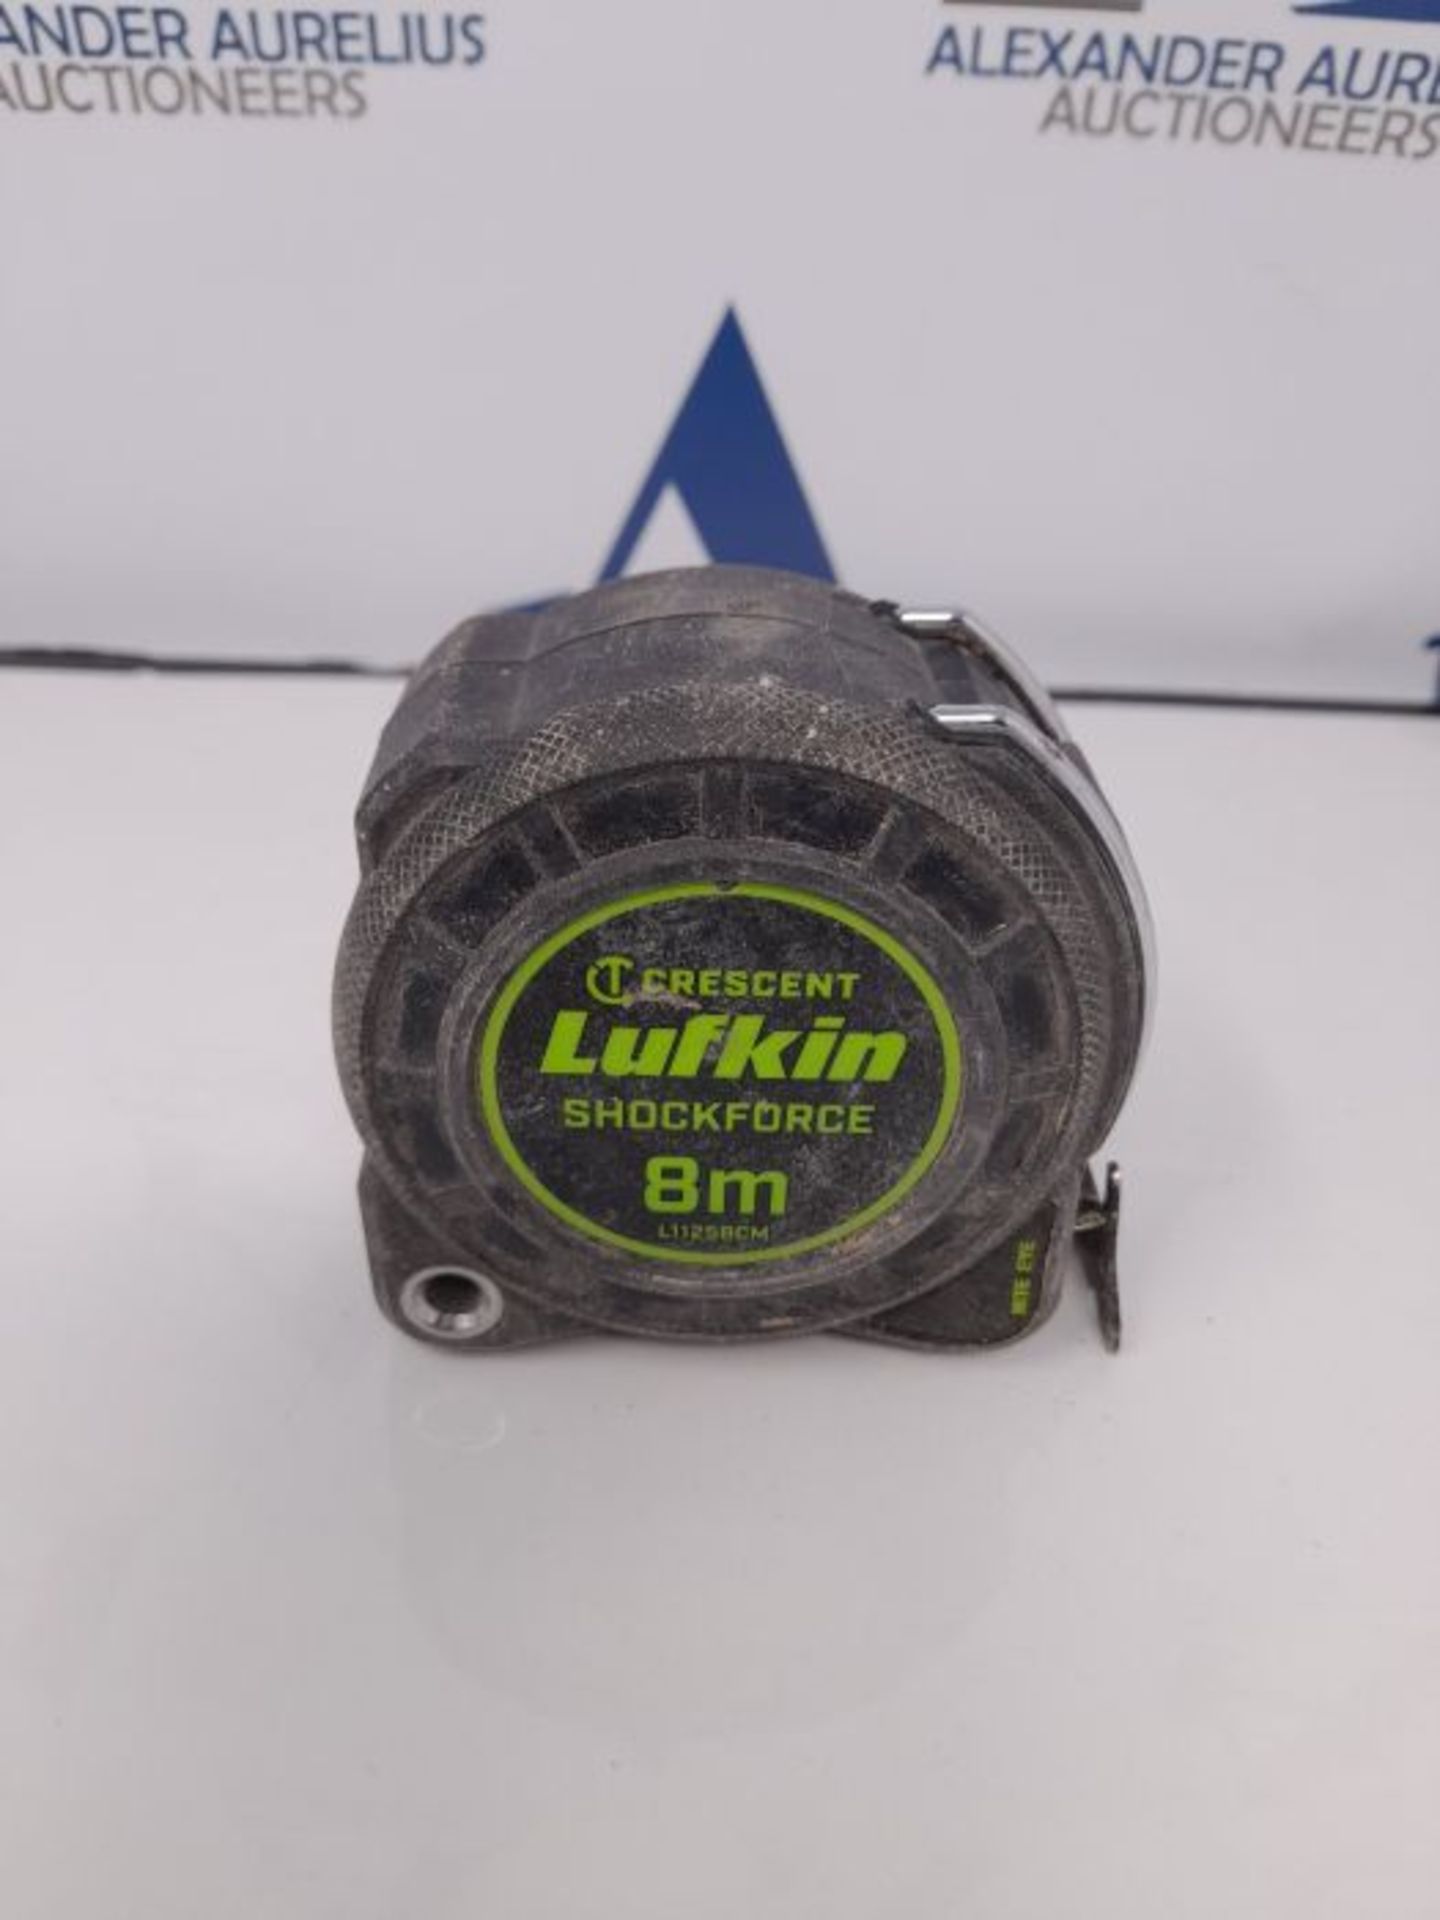 Lufkin L1125BCM 3cm x 8m Shockforce Night Eye Dual Sided Tape Measure, 30 Meter Drop T - Image 2 of 3